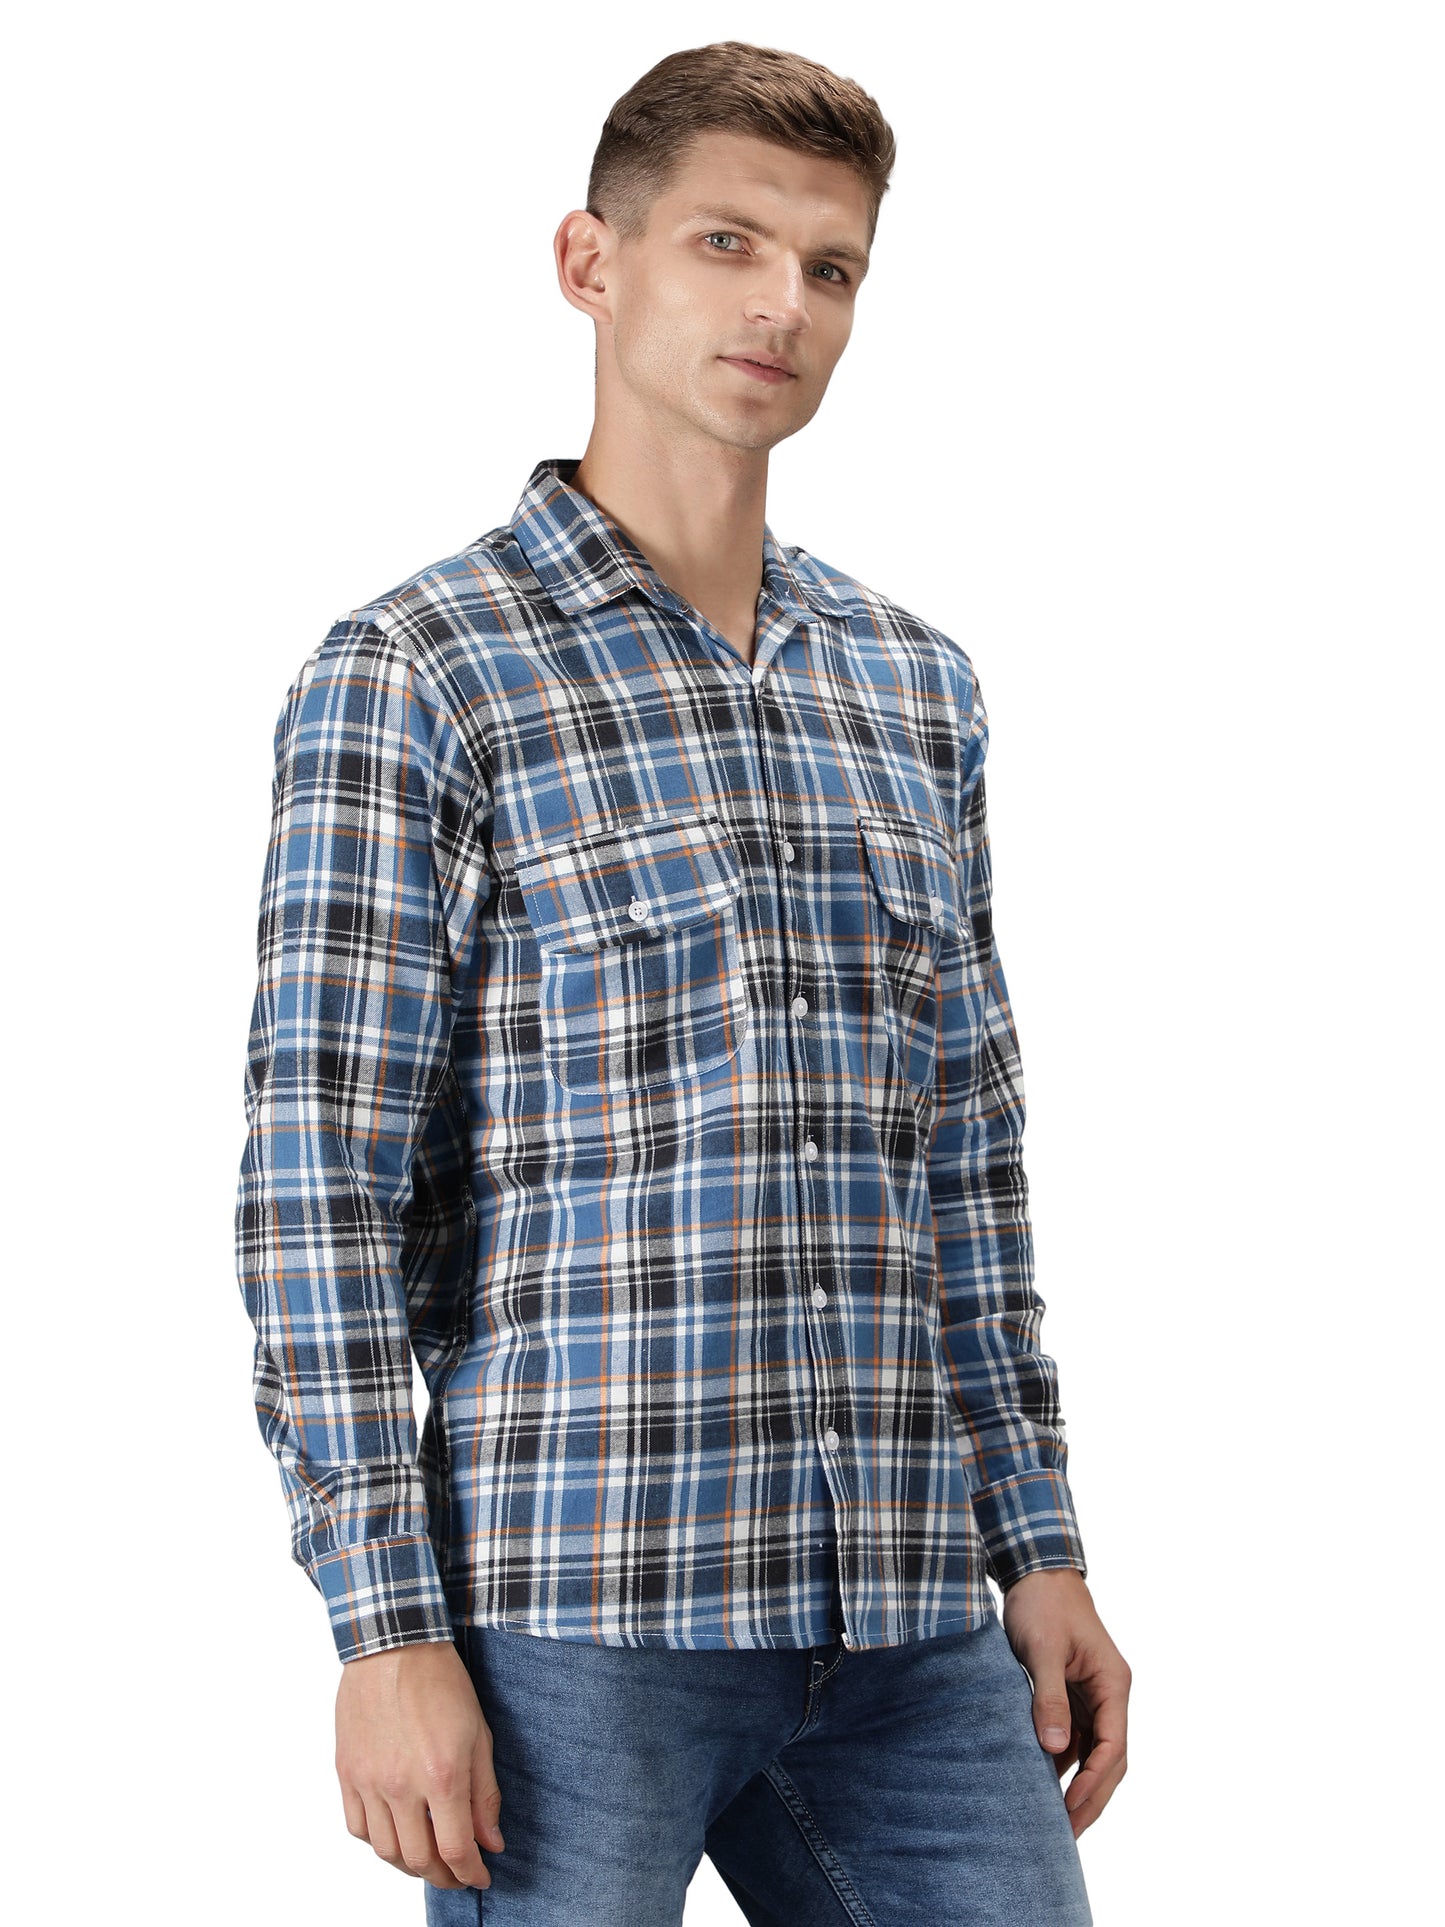 NUEVOSPORTA Pure Cotton Check Pattern Men's Full Sleeve Shirt_Blue/Black